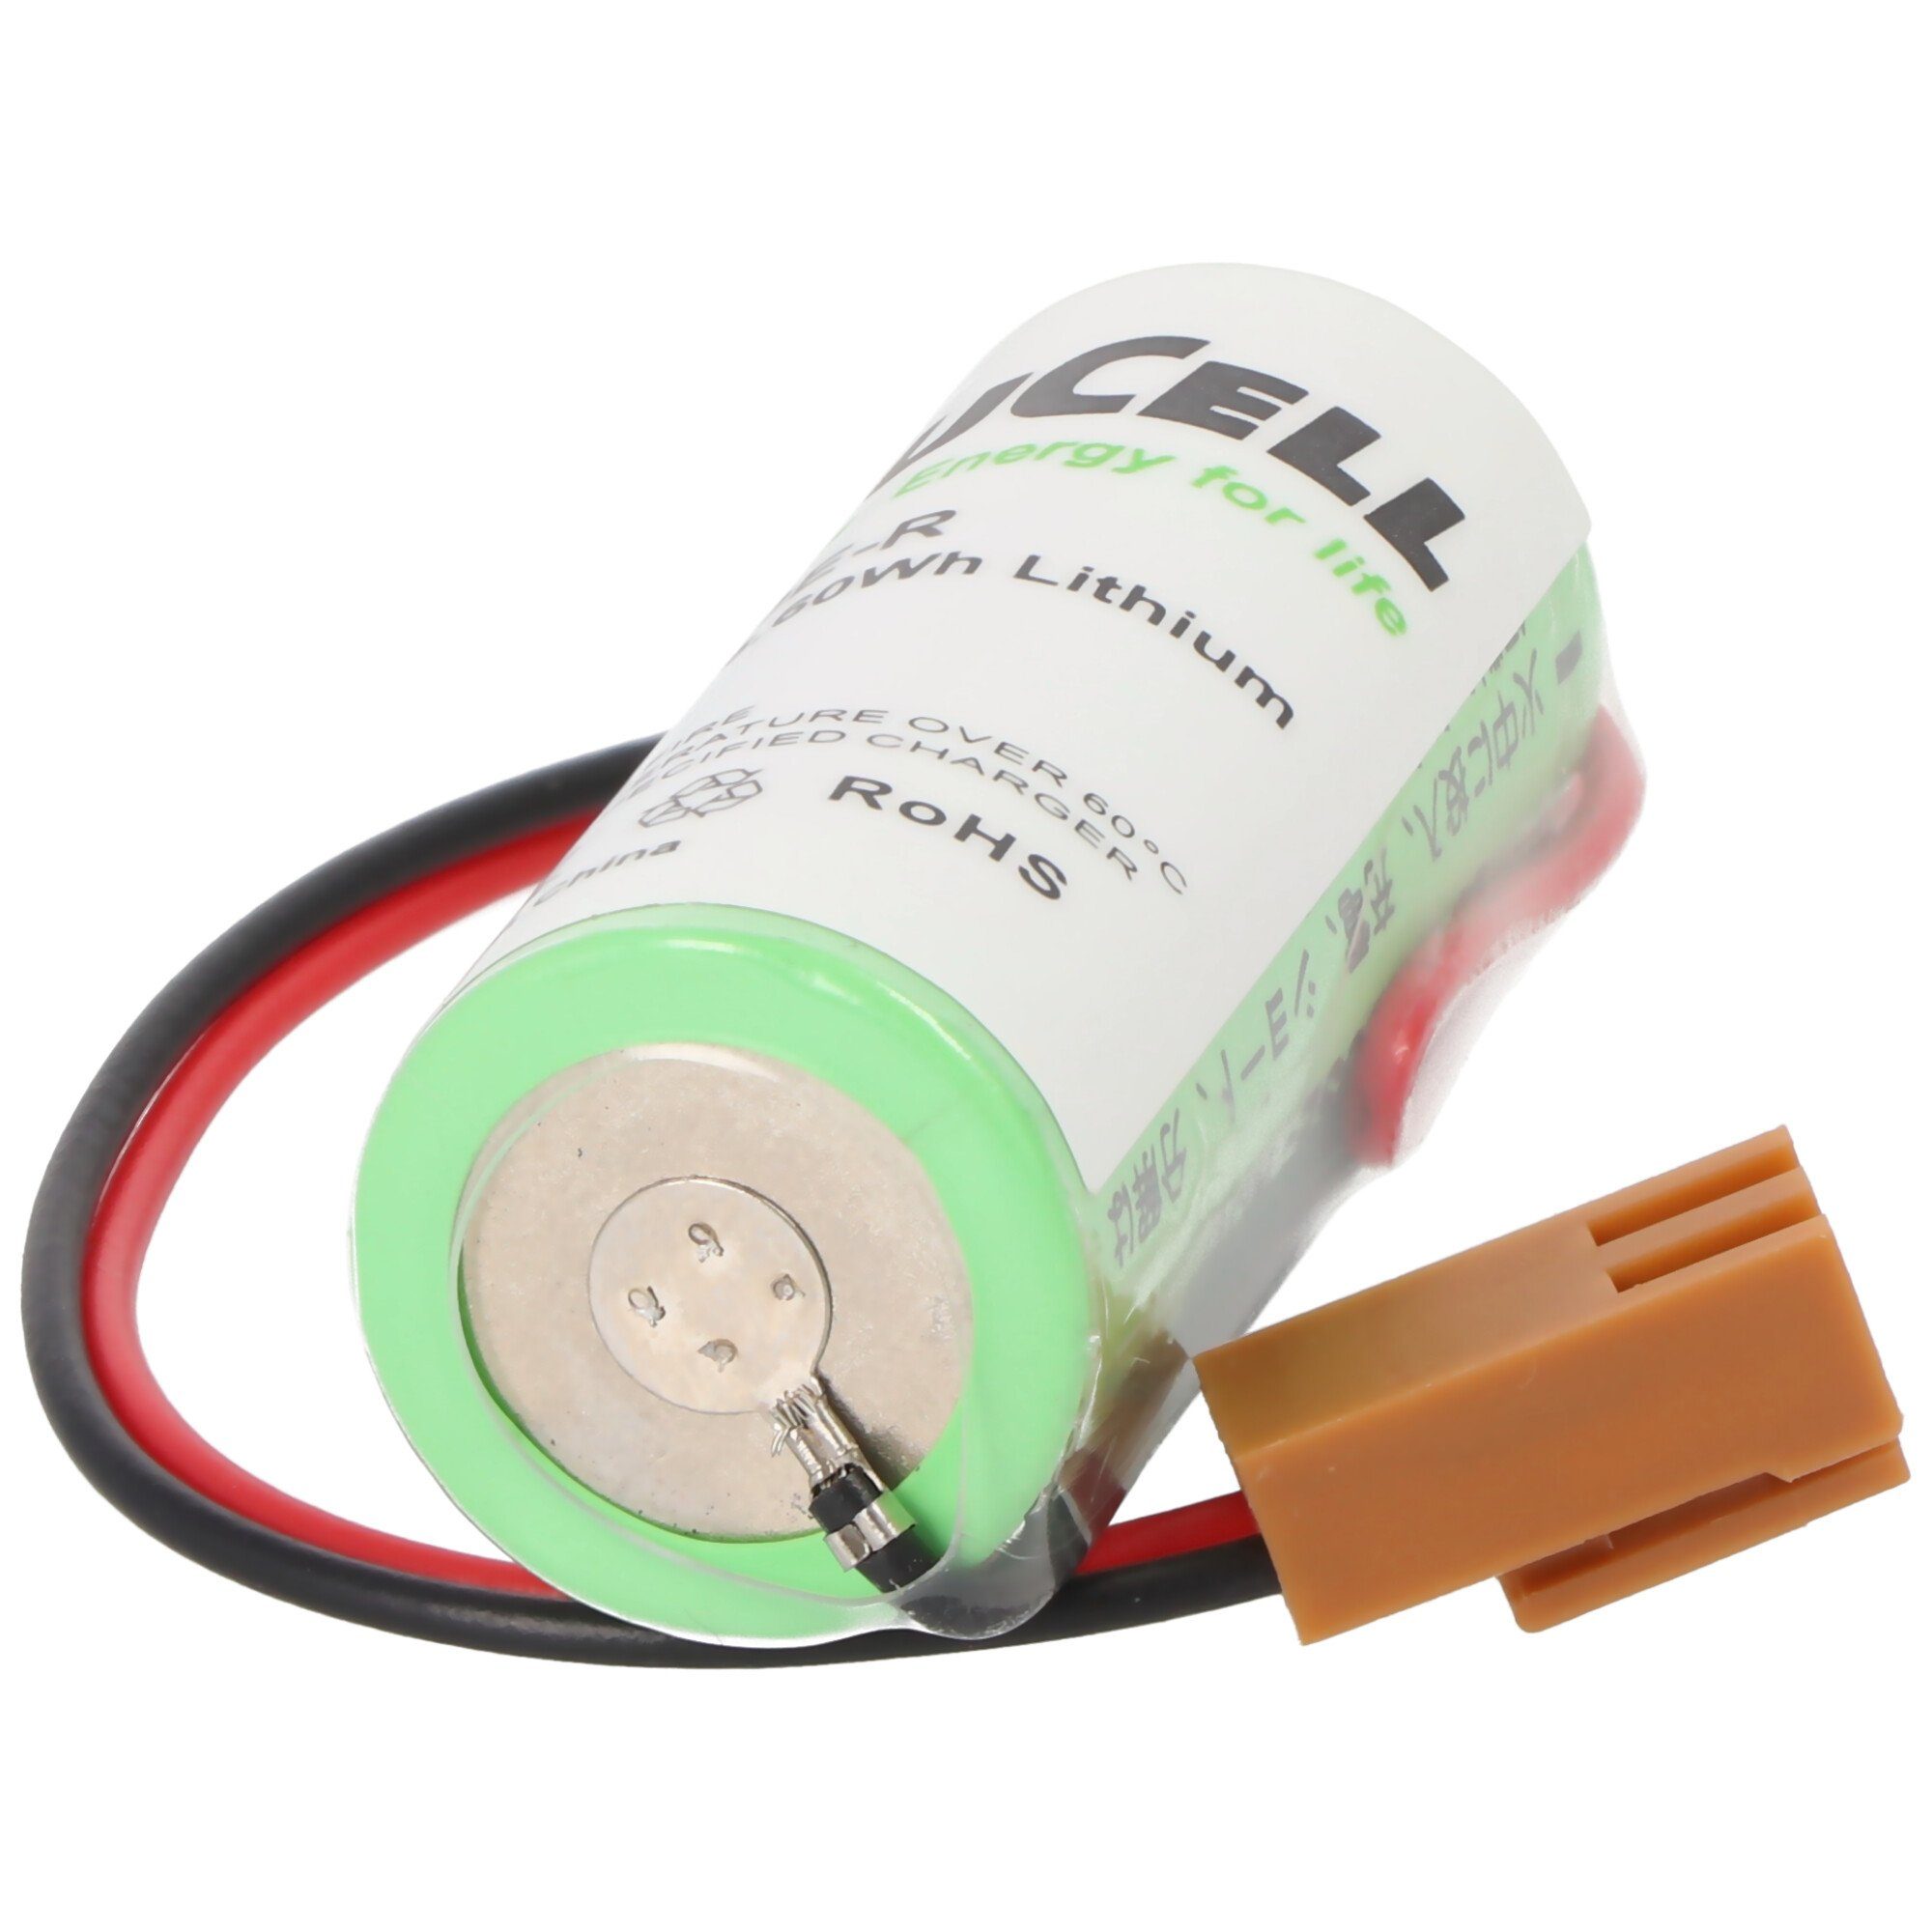 Sanyo Lithium Batterie V) St Size mit CR17450E-R Kabel Batterie, und LX98L-0031-0012, A, (3,0